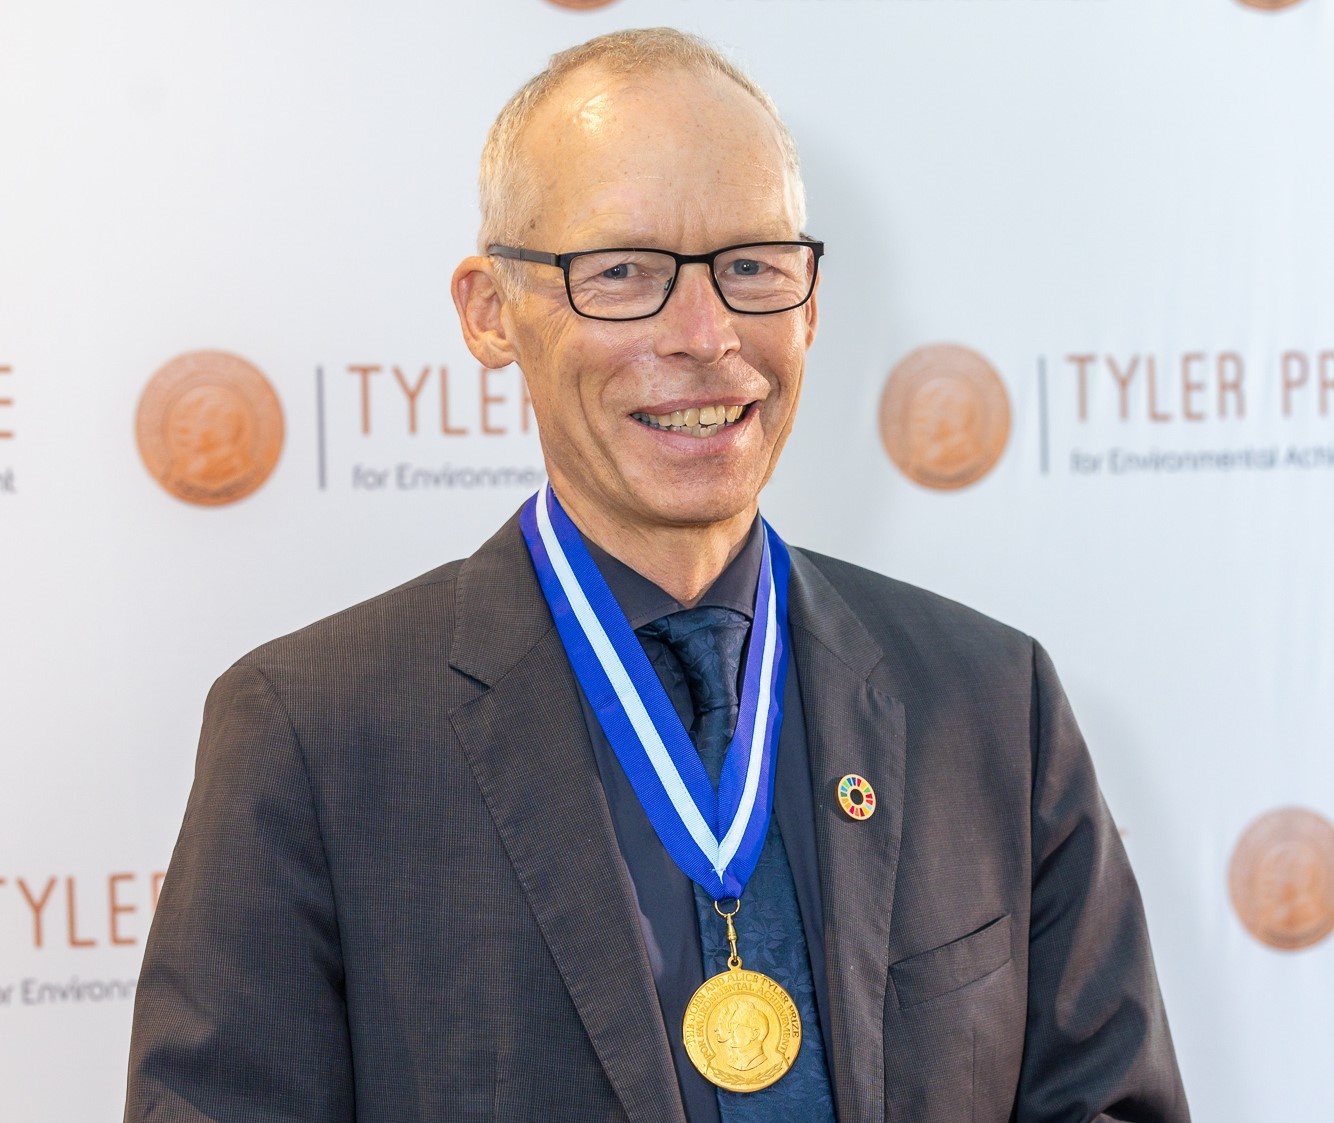 Johan Rockström awarded Tyler Prize for Environmental Achievement in Potsdam